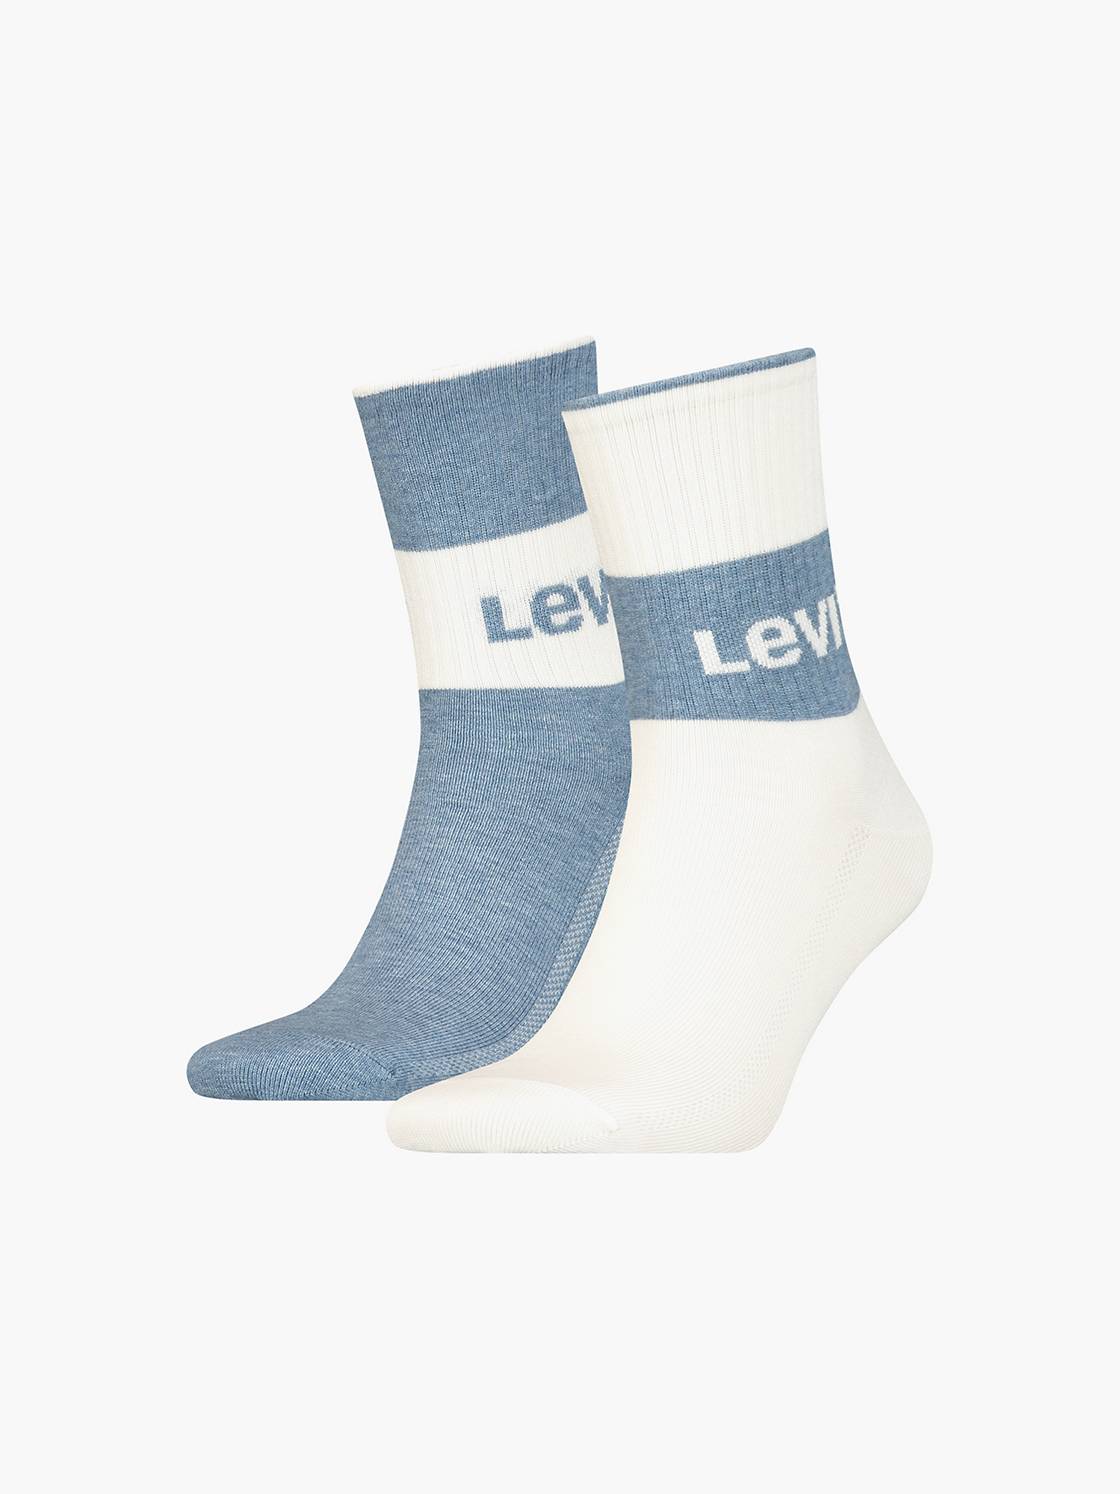 Levi's® Short Cut Sustainable Sports Socks - 2 Pack 1